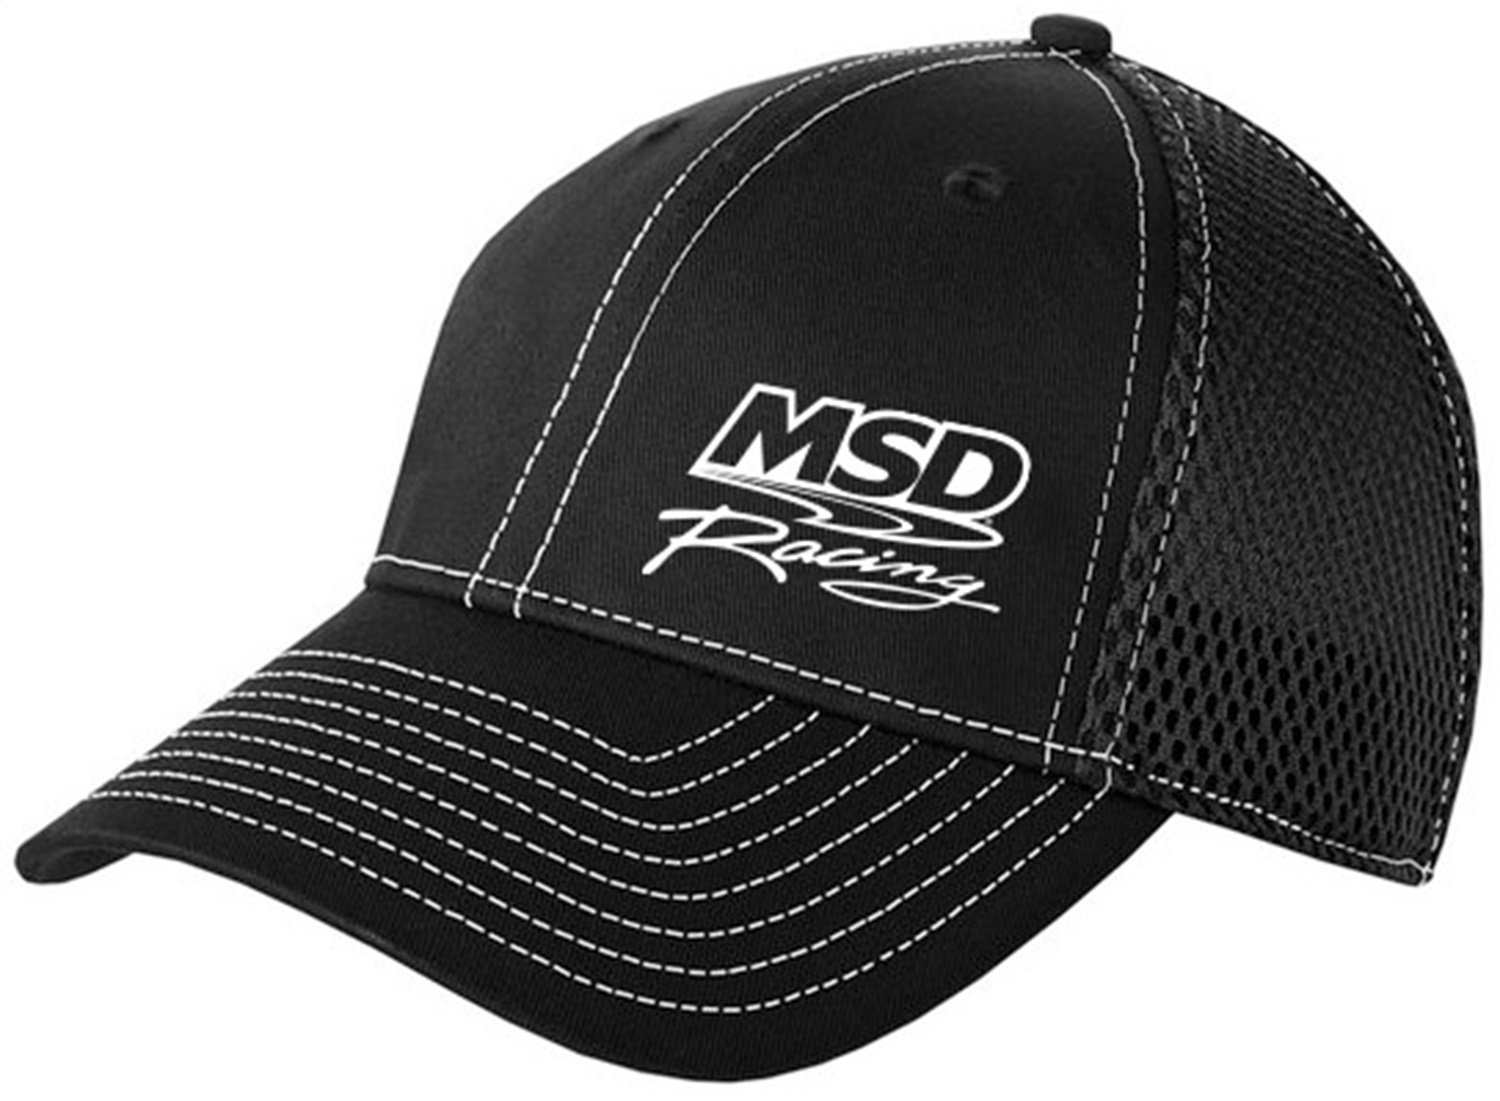 MSD Racing Flexfit Baseball Cap Black Mesh w/ White Stitching